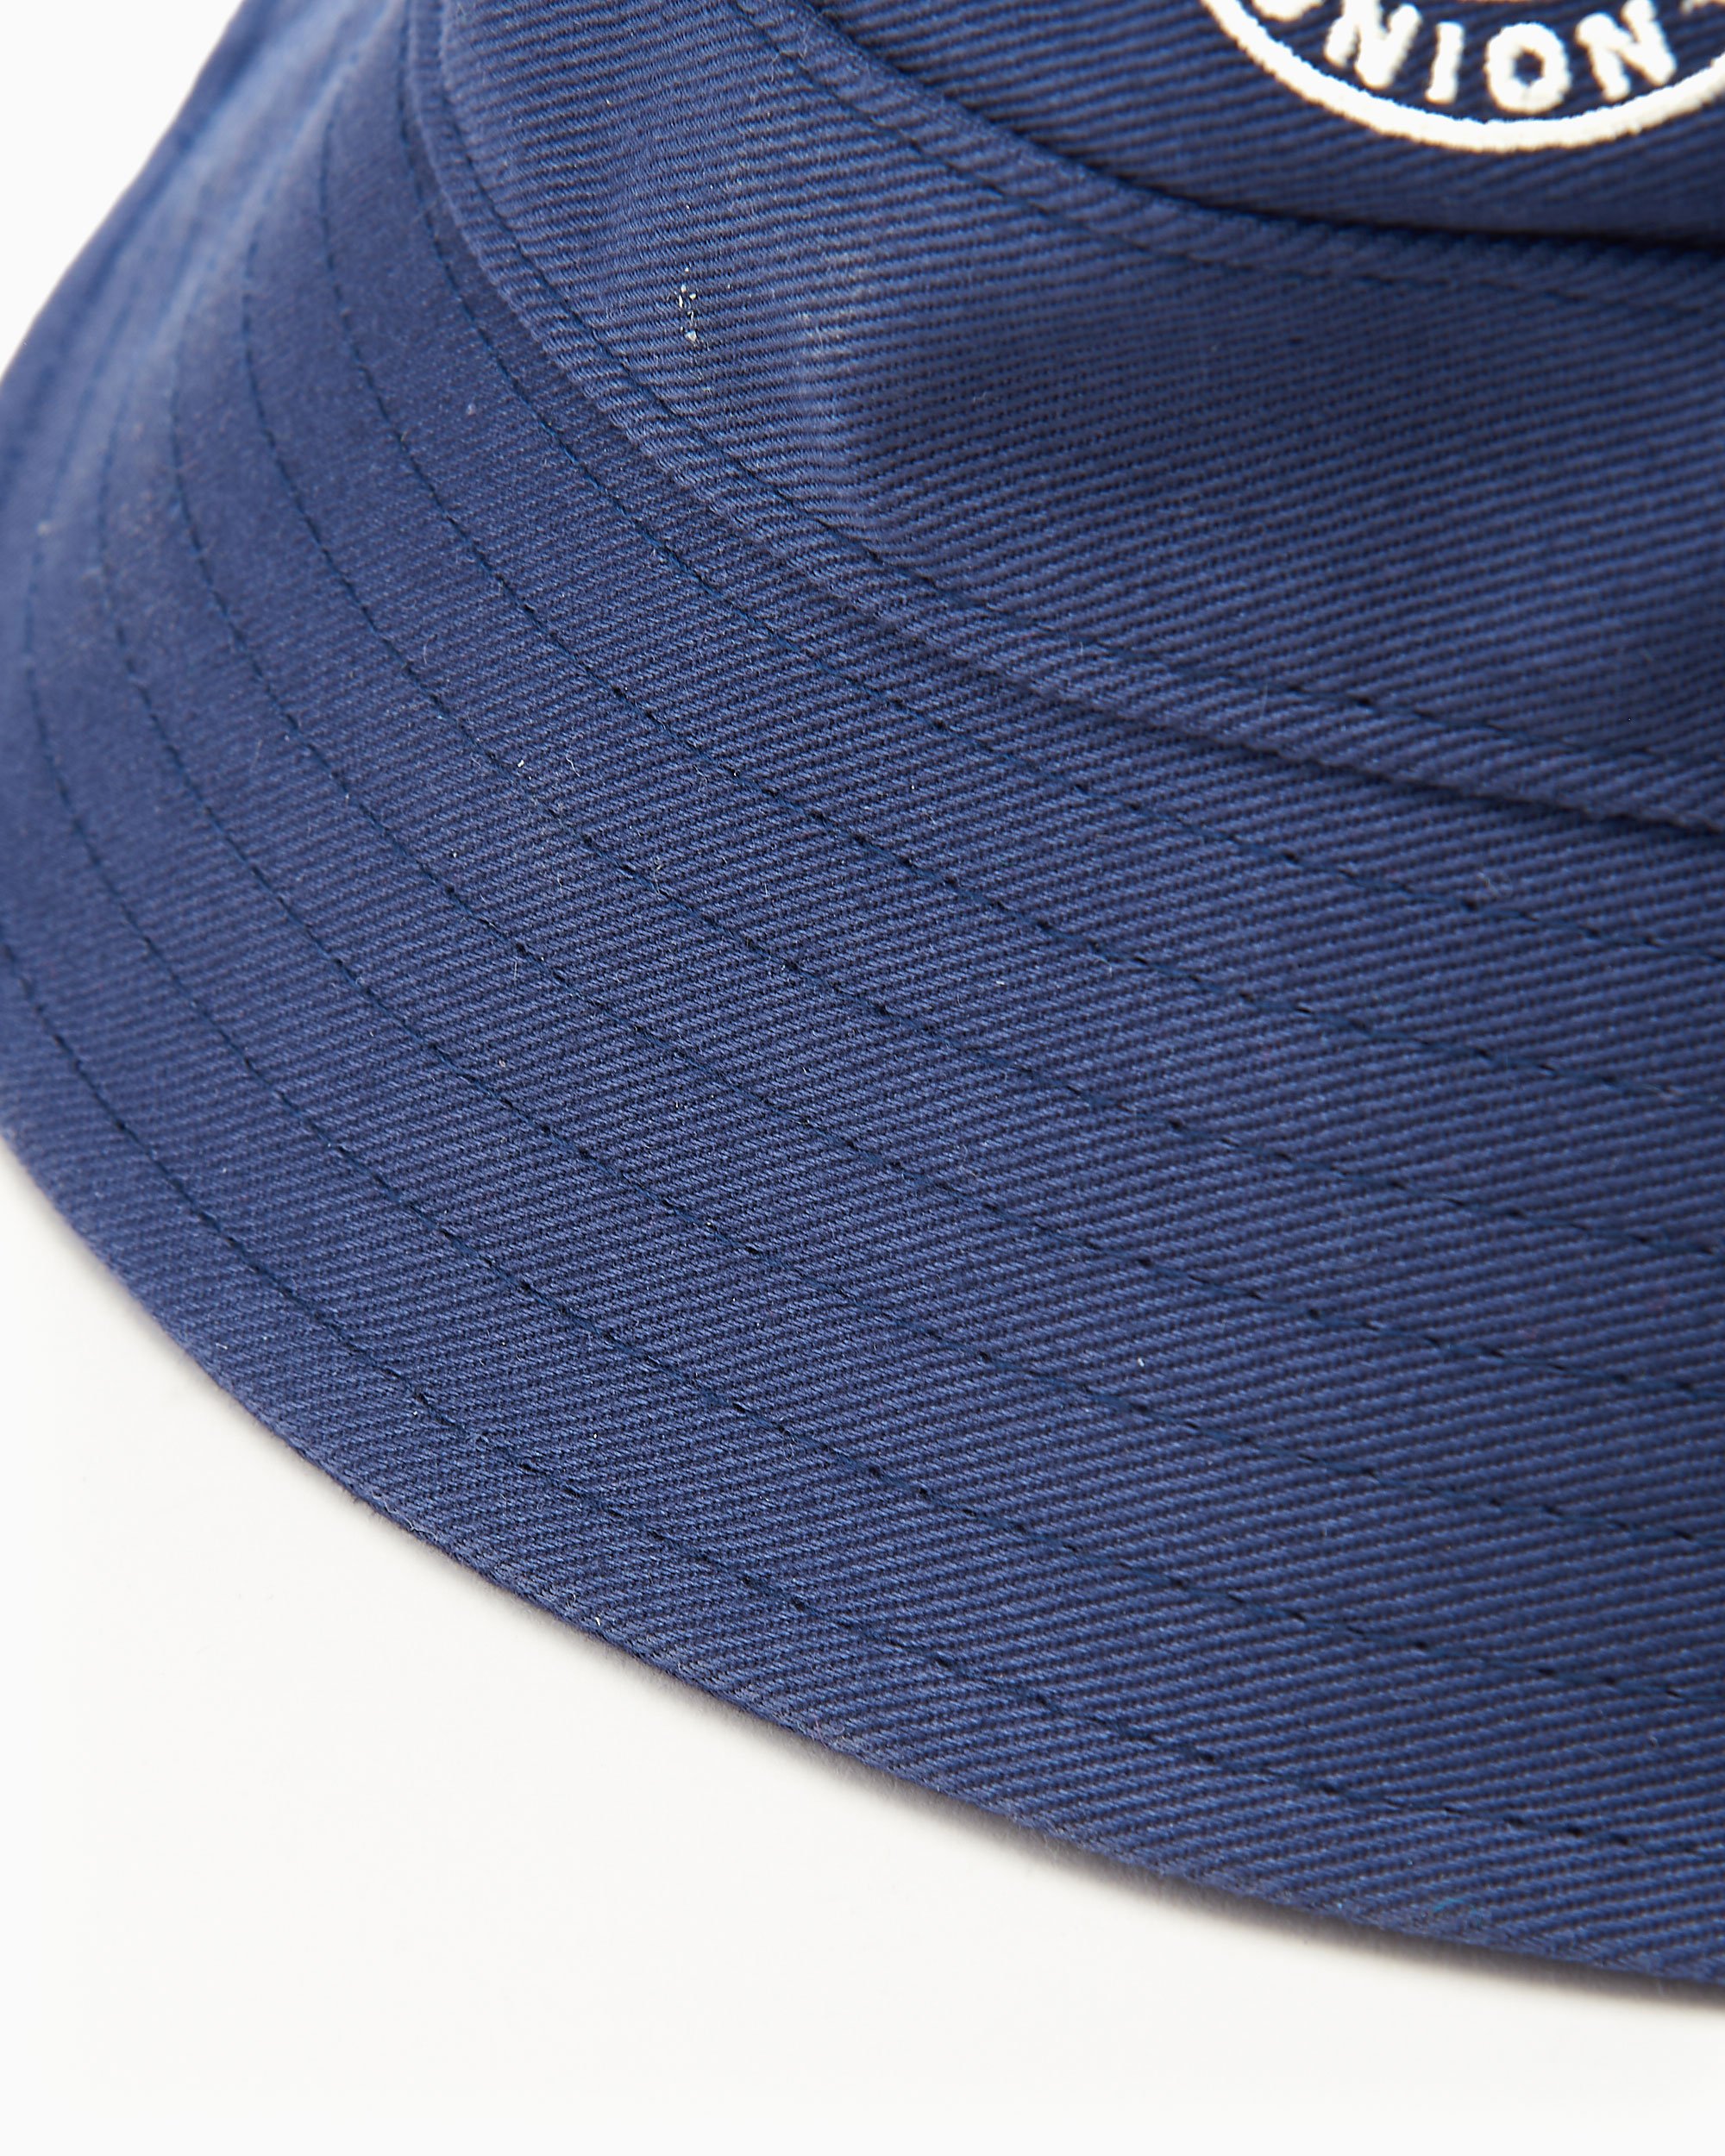 Jordan x UNION Unisex Bucket Hat Blue DX6483-419| Buy Online at